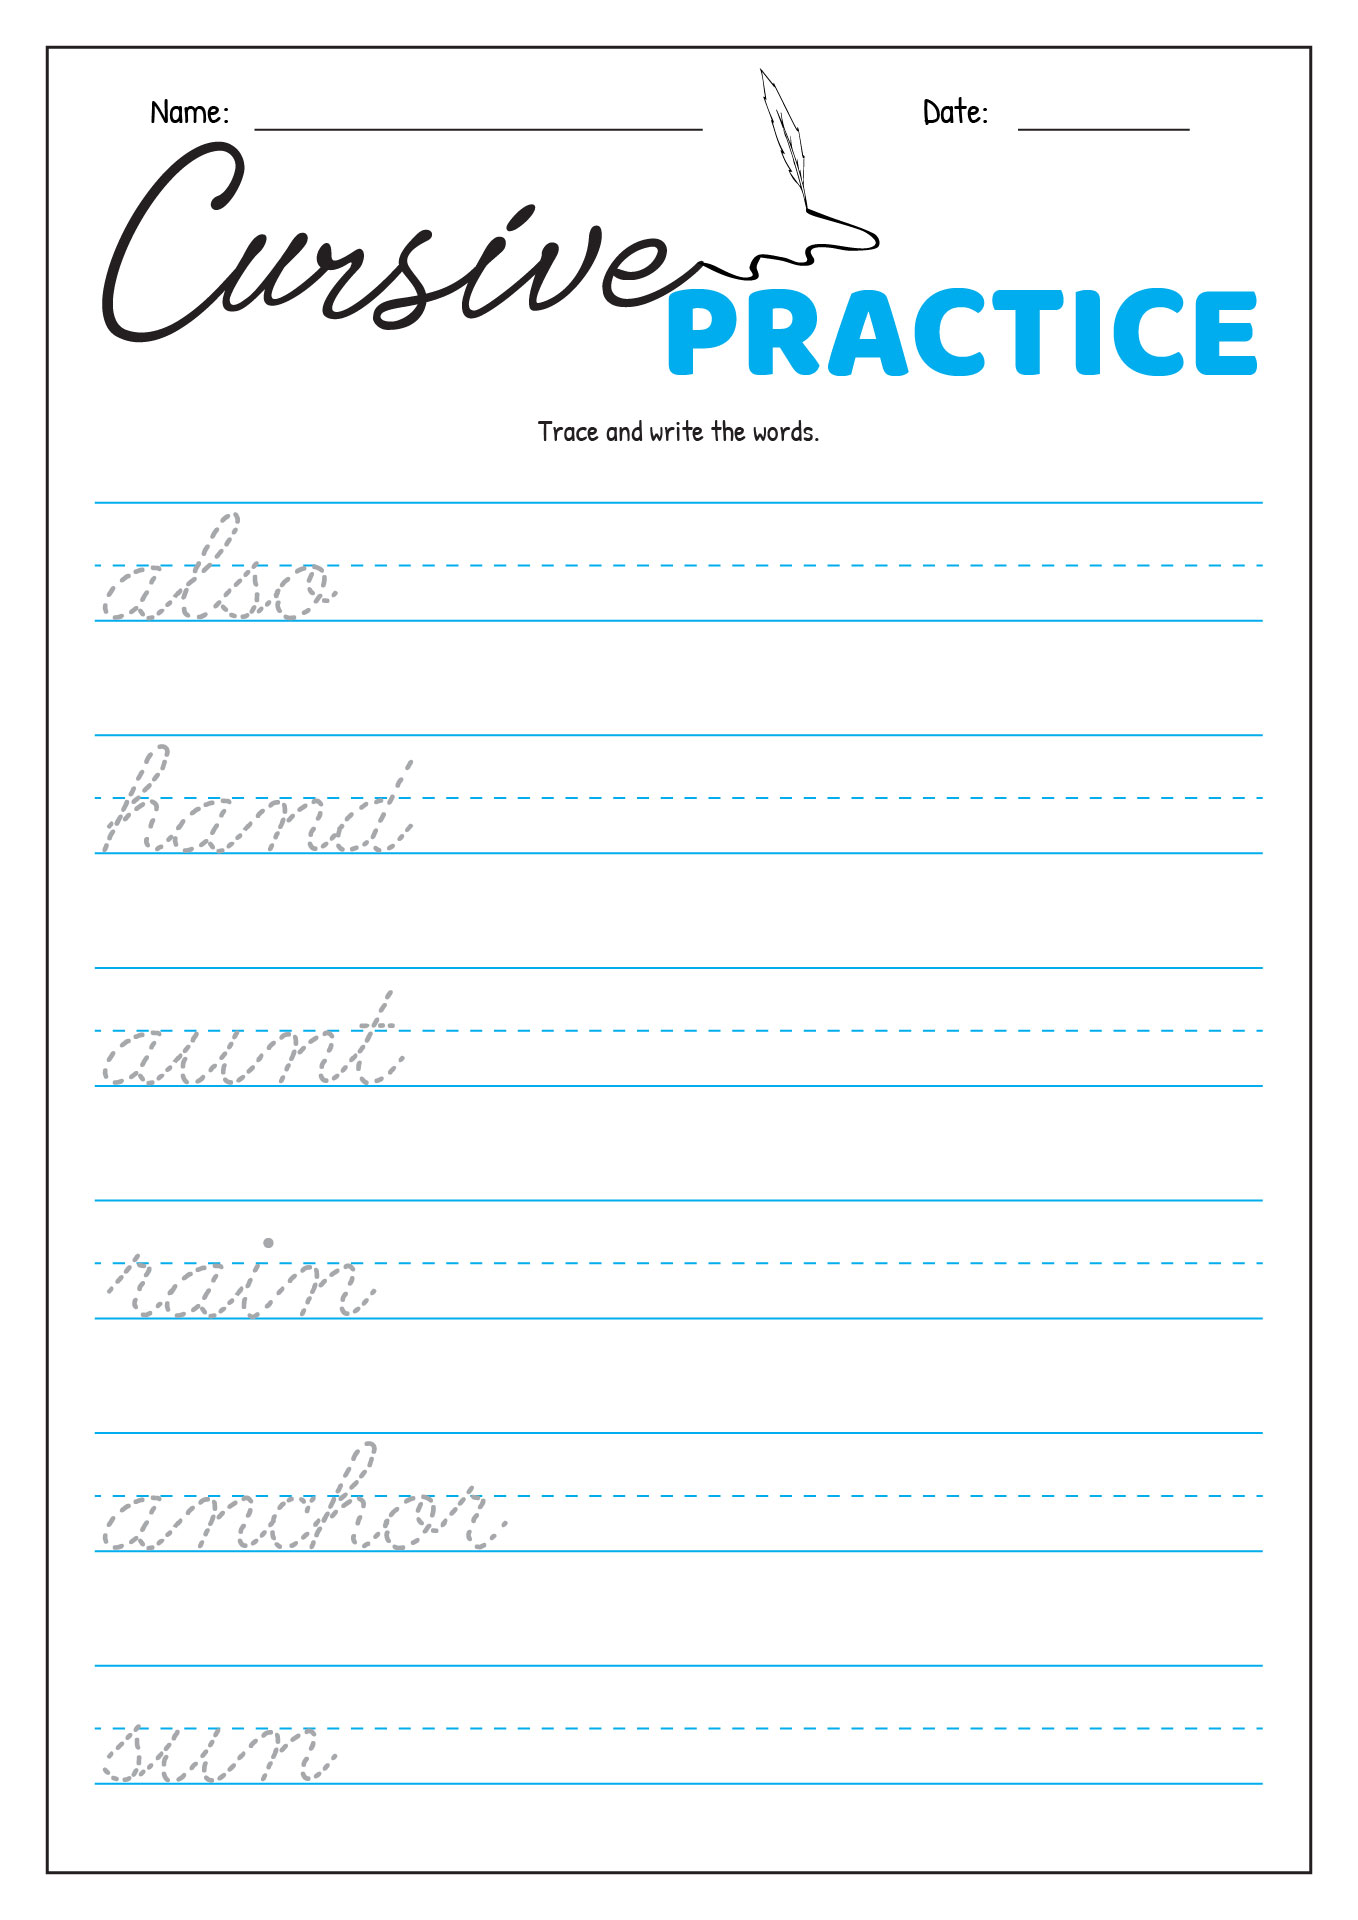 16 Best Images of Cursive Writing Worksheets For 3rd Grade